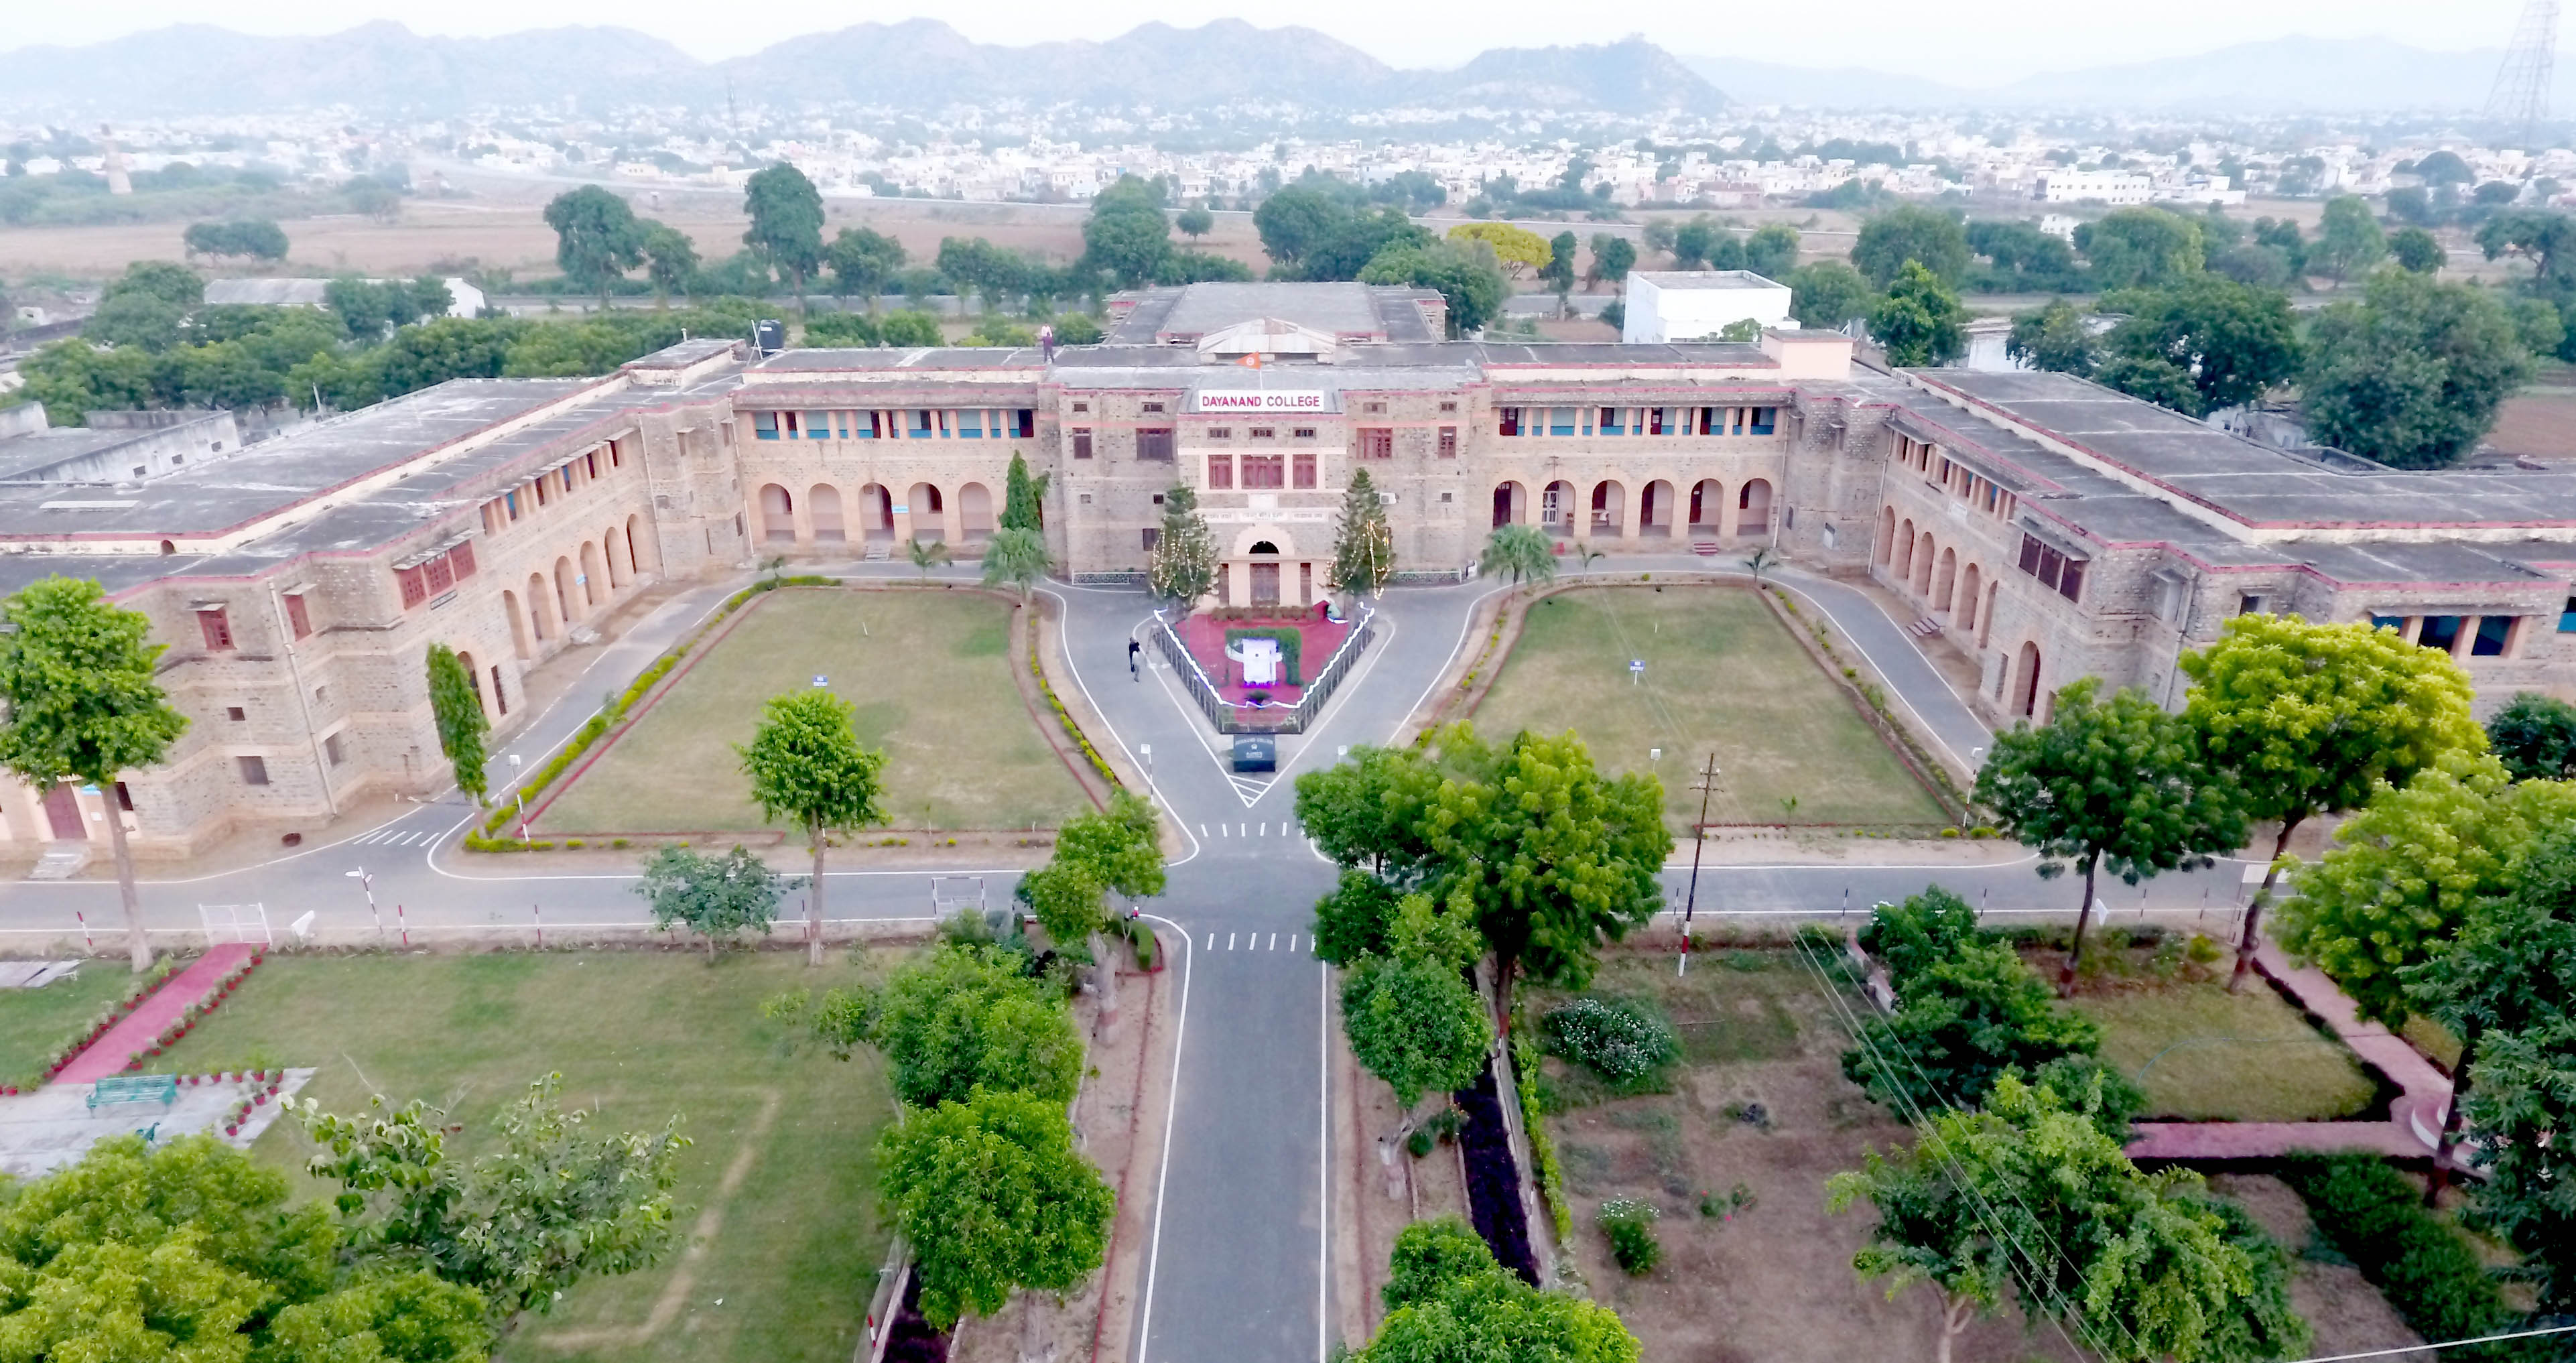 Dayanand College Ajmer